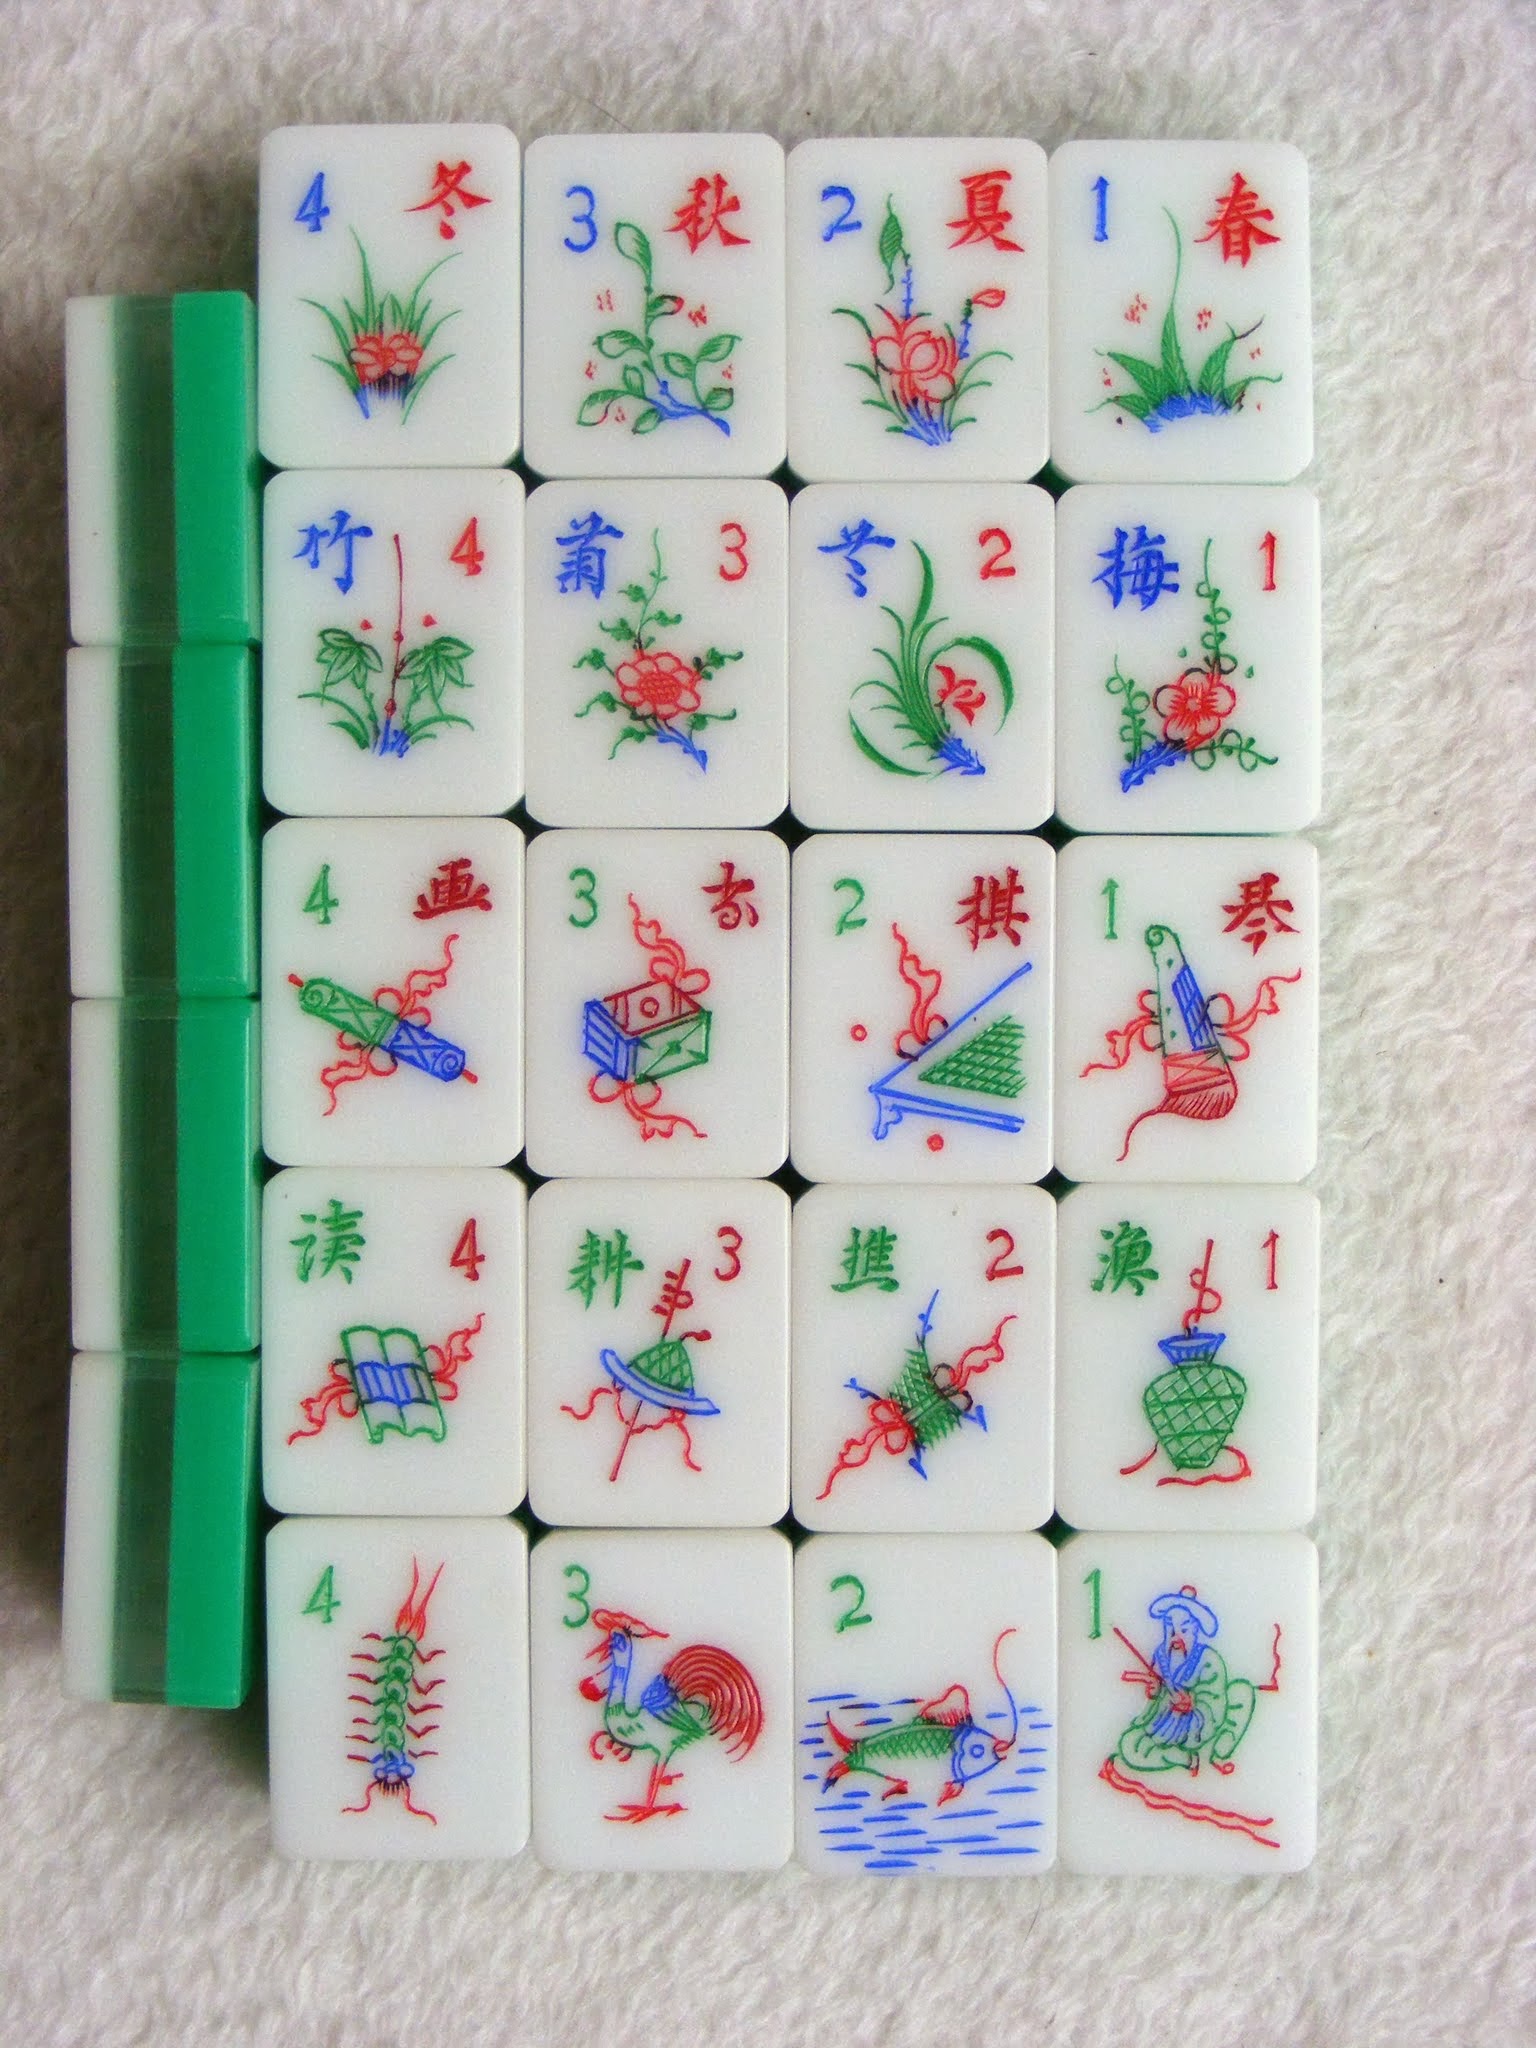 Hand Carved Tri color Mahjong Tiles: Some Flower Tile Interpretations